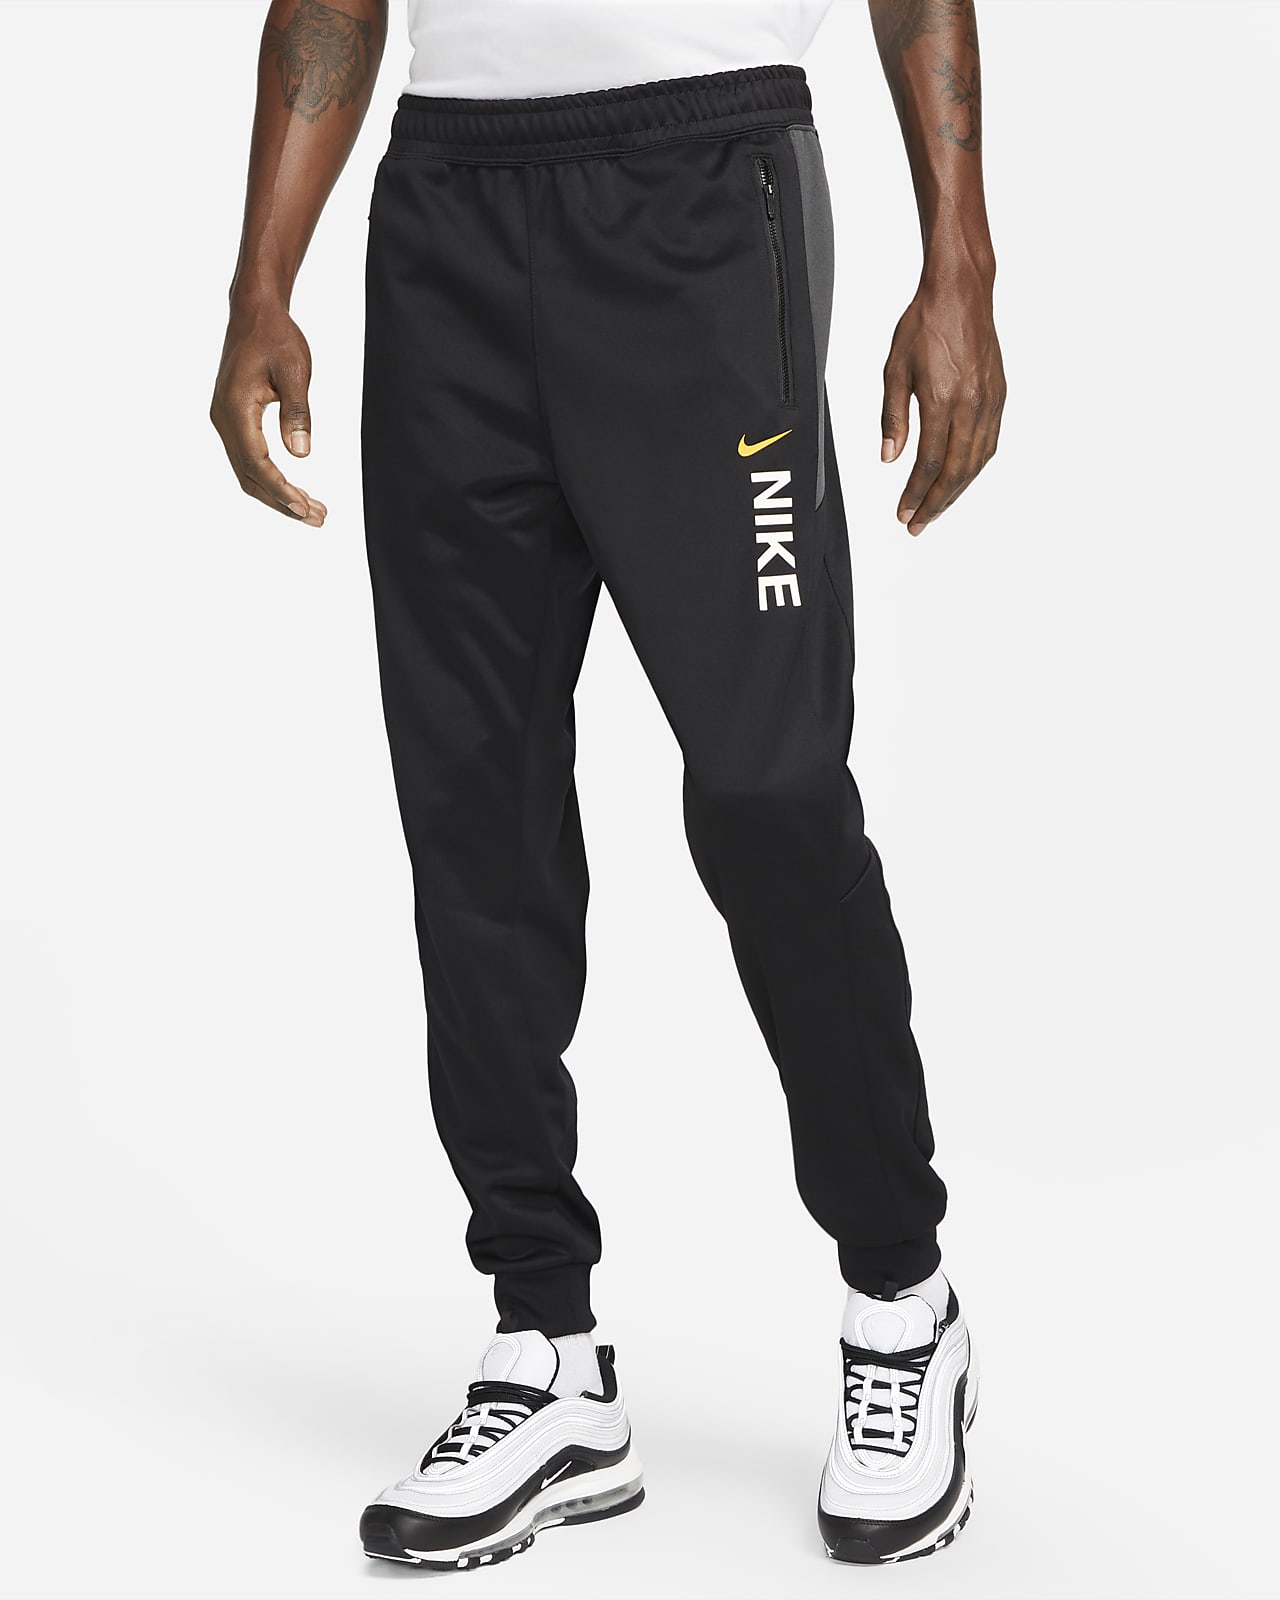 Toeschouwer Wantrouwen portemonnee Nike Sportswear Hybrid Joggingbroek voor heren. Nike NL